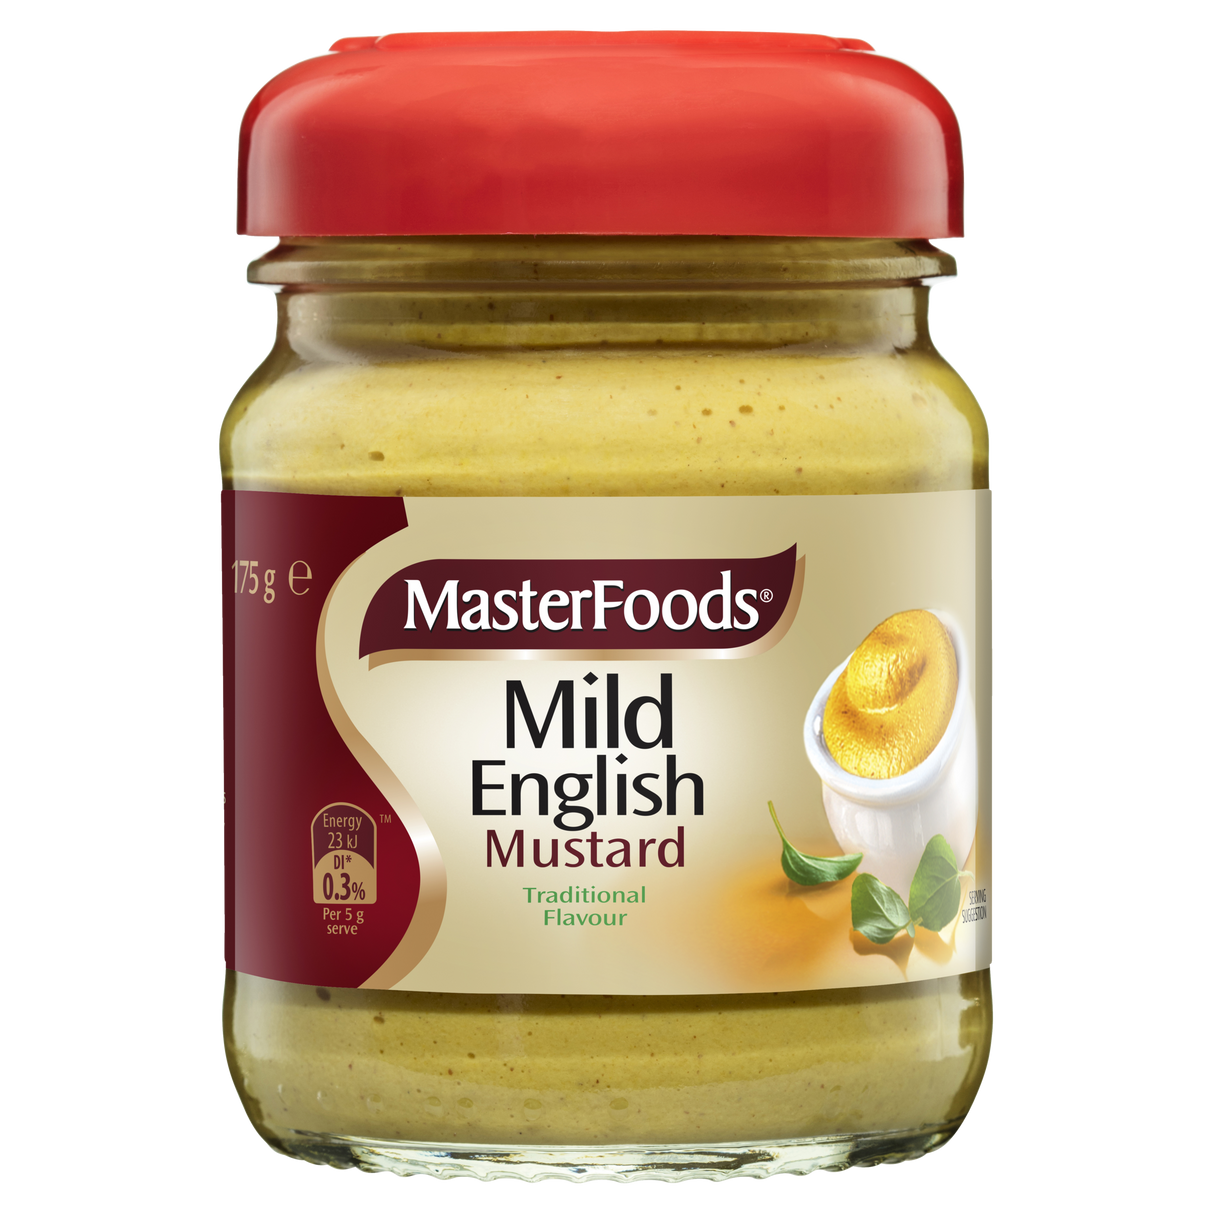 MasterFoods Mild English Mustard 175g